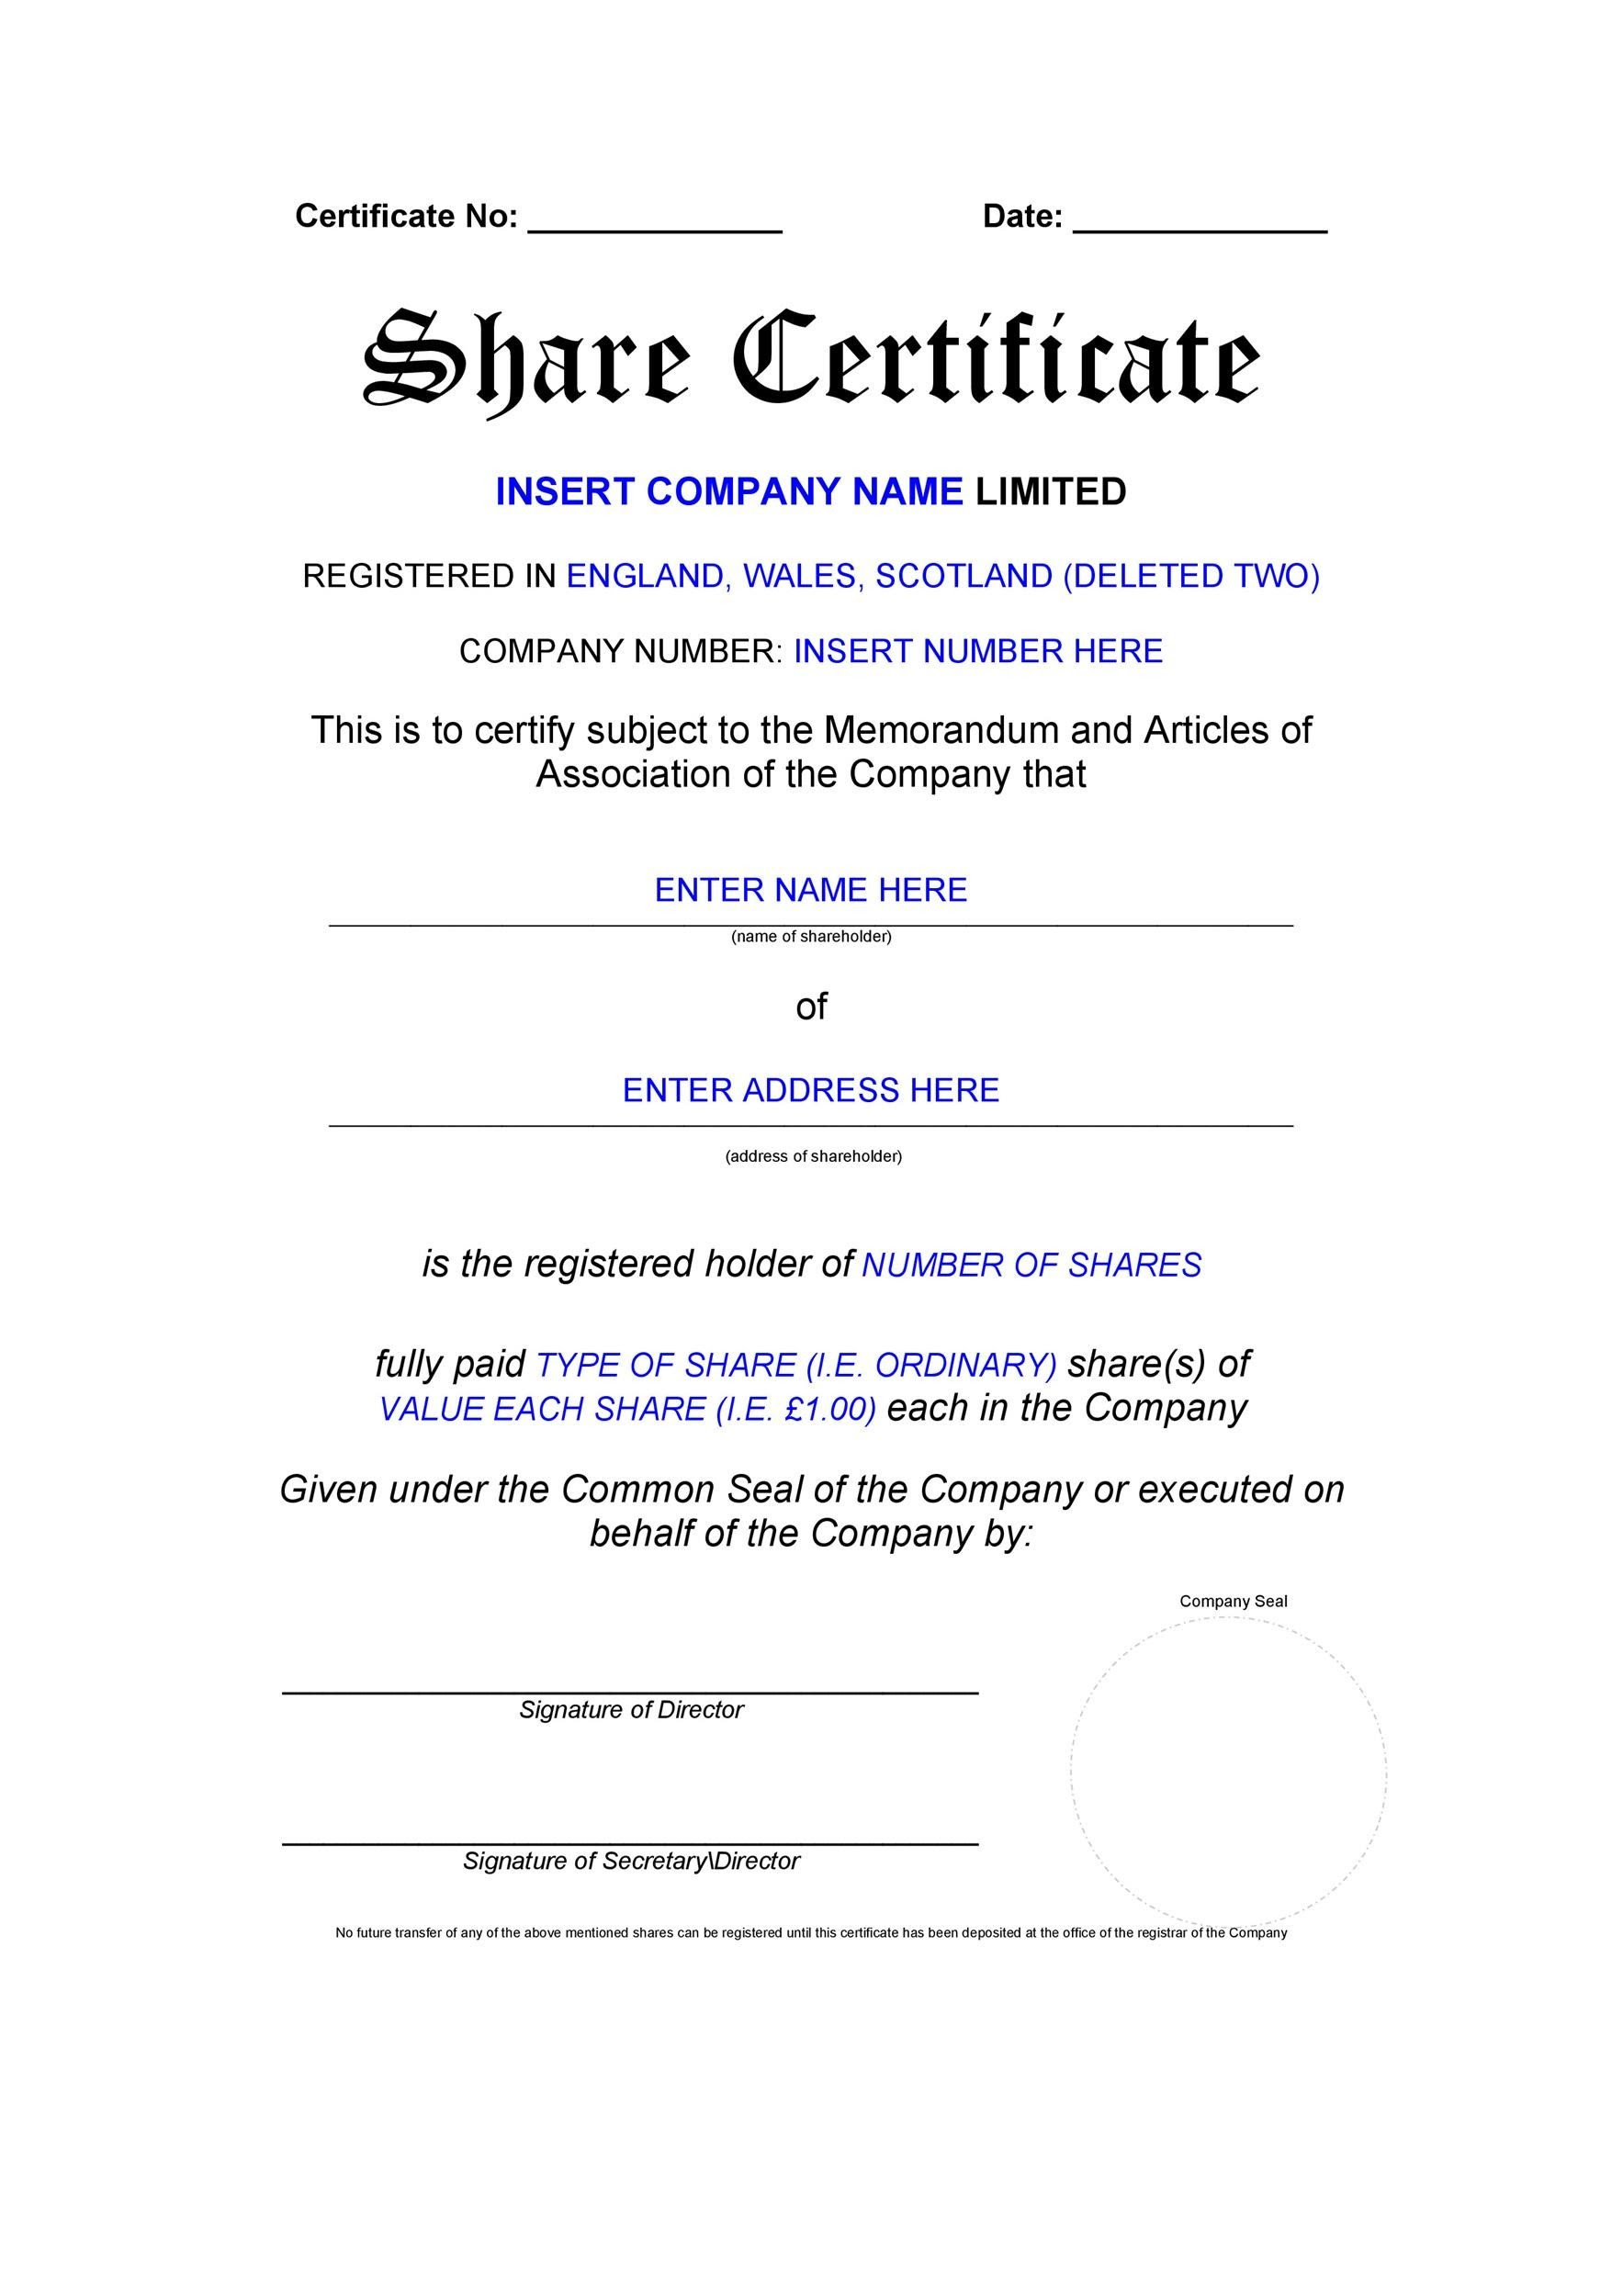 Share Certificate Template Cipc - Captions Lovers Intended For Share Certificate Template Companies House